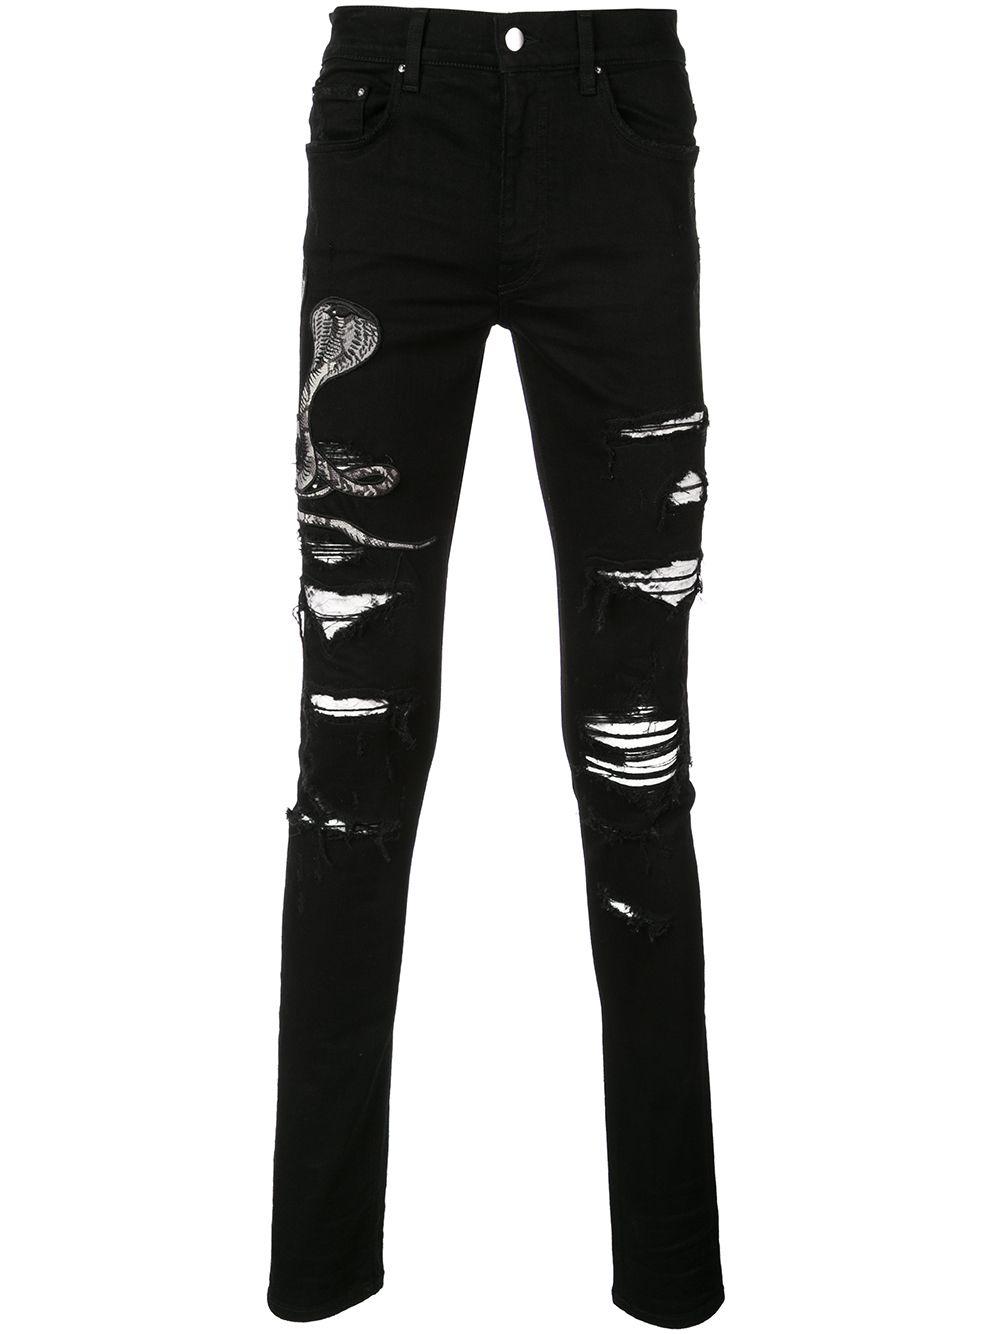 Amiri Denim Snake Patch Jeans in Black for Men - Lyst